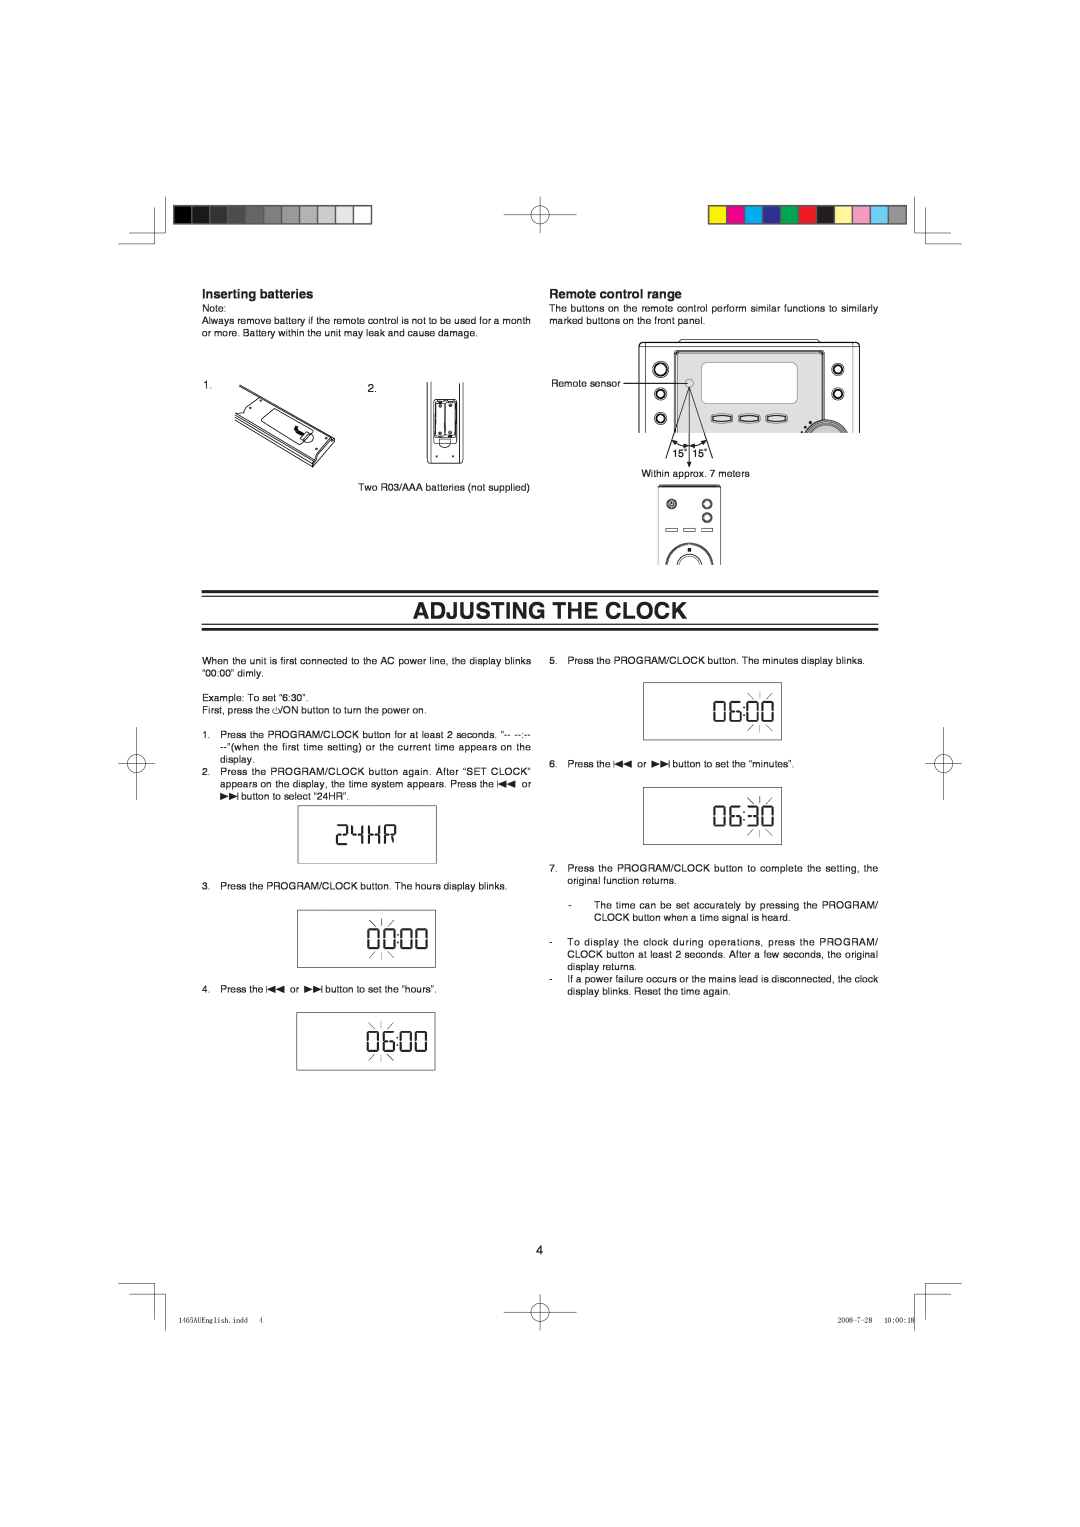 Sanyo DC-DA1465M instruction manual Adjusting The Clock, Inserting batteries, Remote control range 